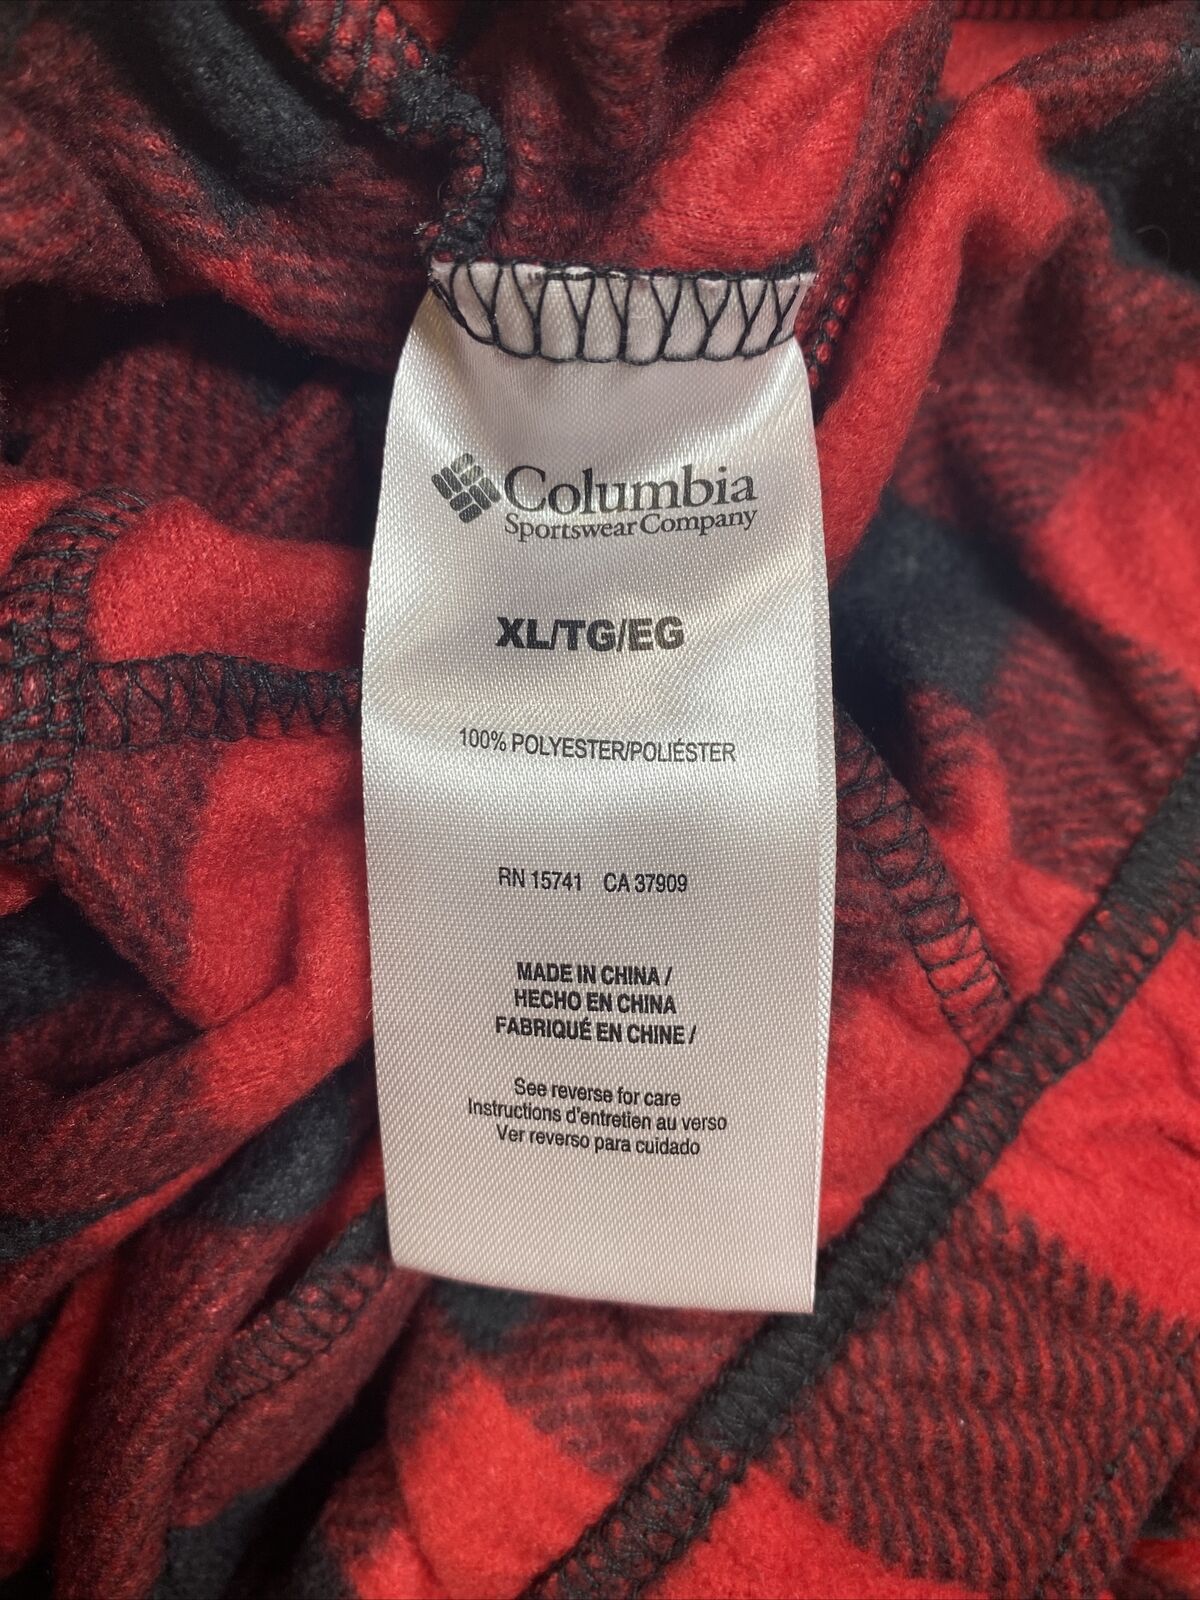 Columbia Women's Red/Black Buffalo Plaid Fleece Pajama Pants - XL